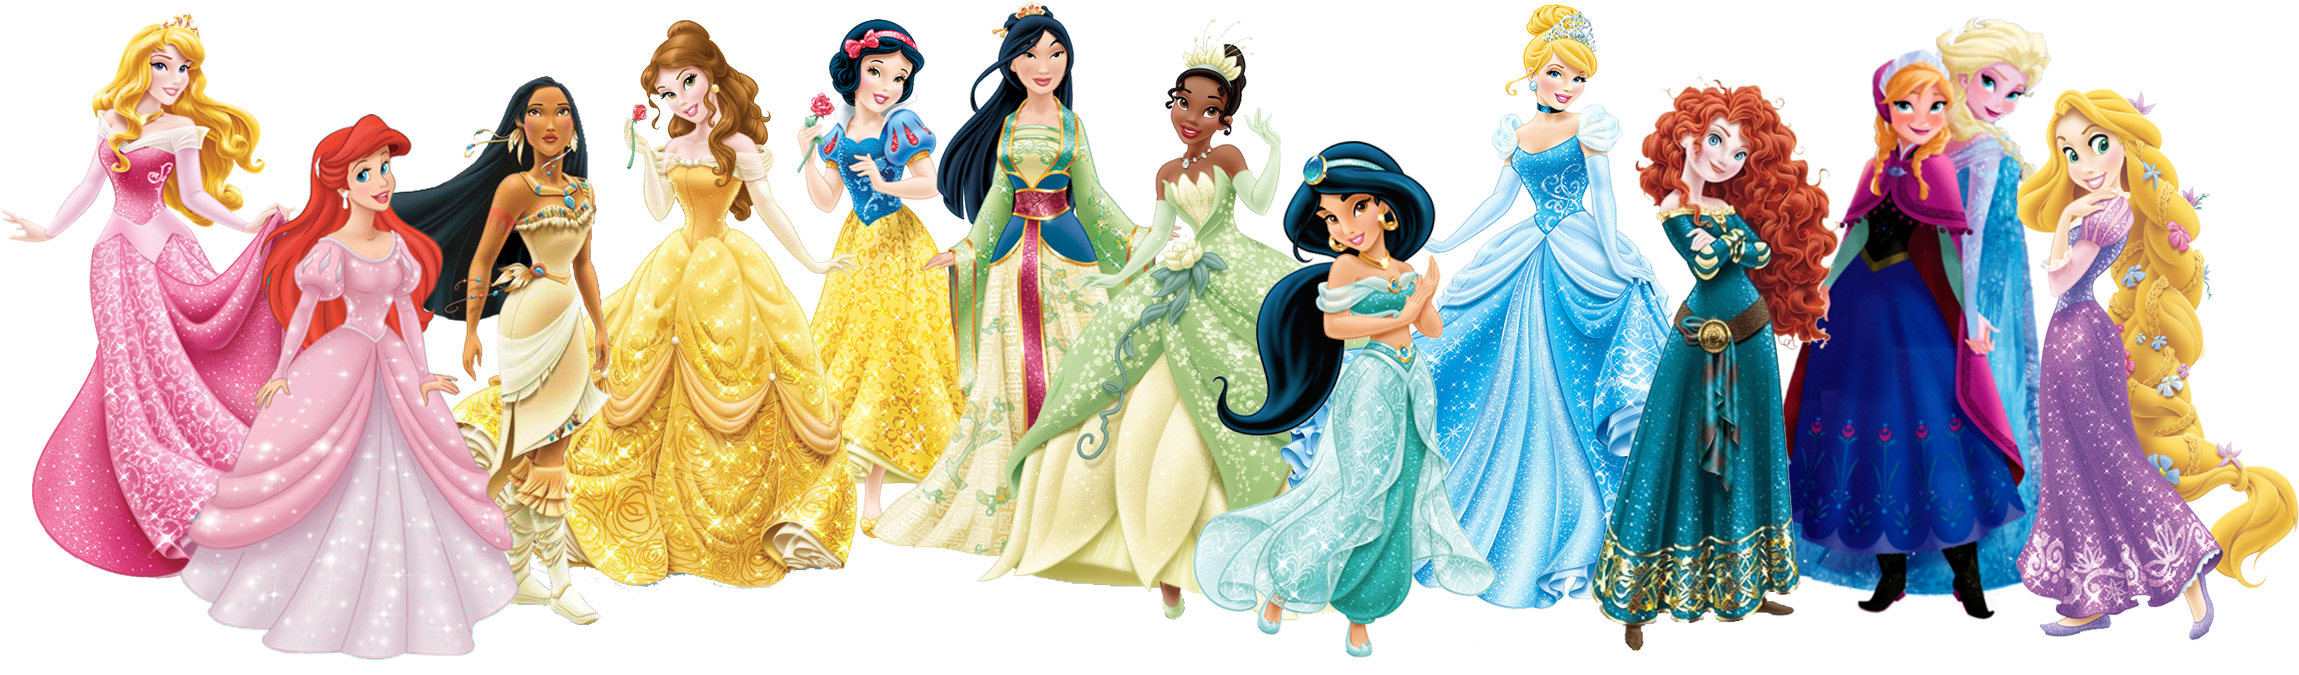 Disney Princesses Png Picture - All Disney Princess 2018 - Free ...